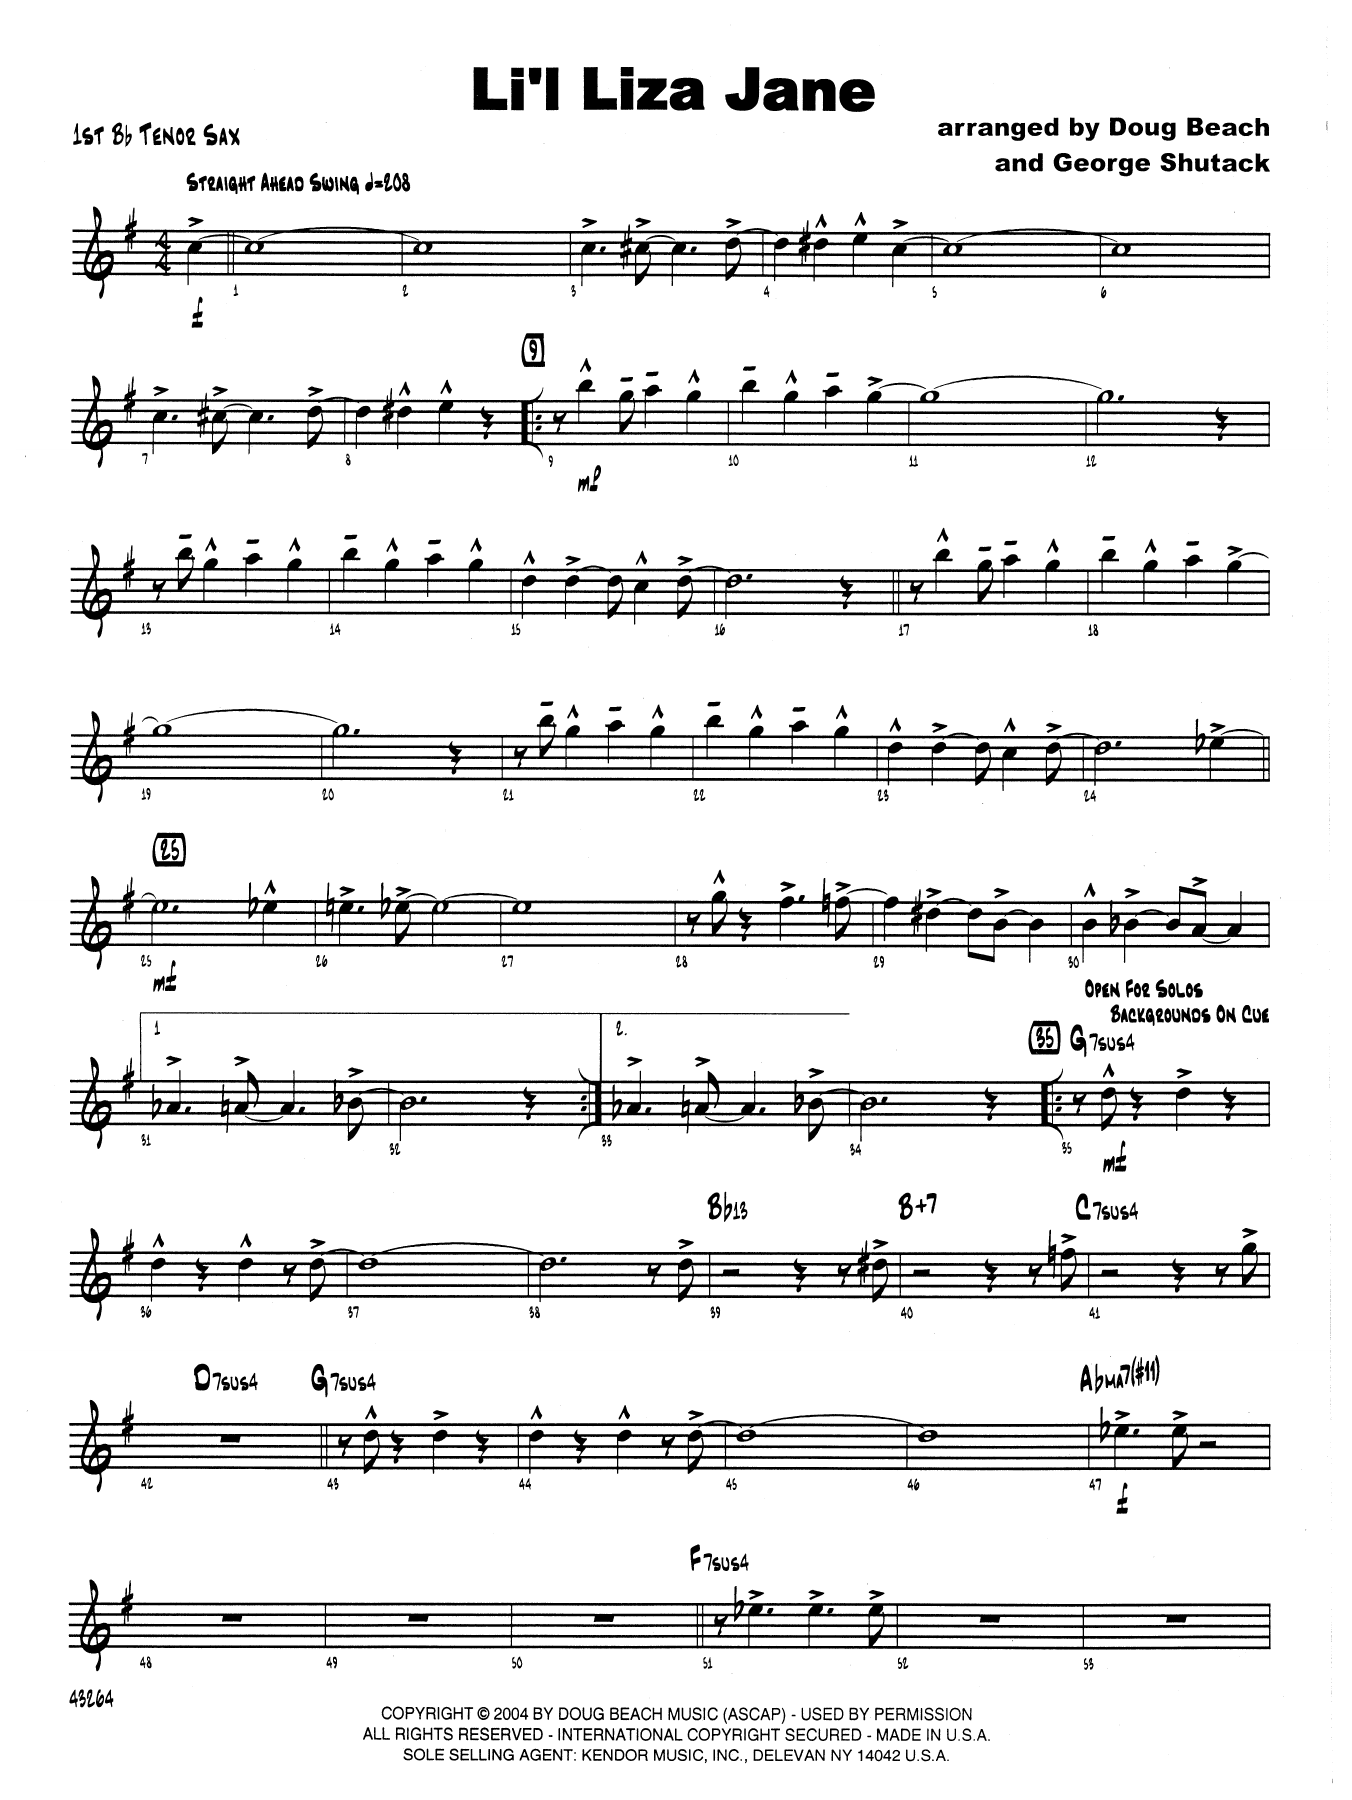 Download Doug Beach & George Shutack Li'l Liza Jane - 1st Tenor Saxophone Sheet Music